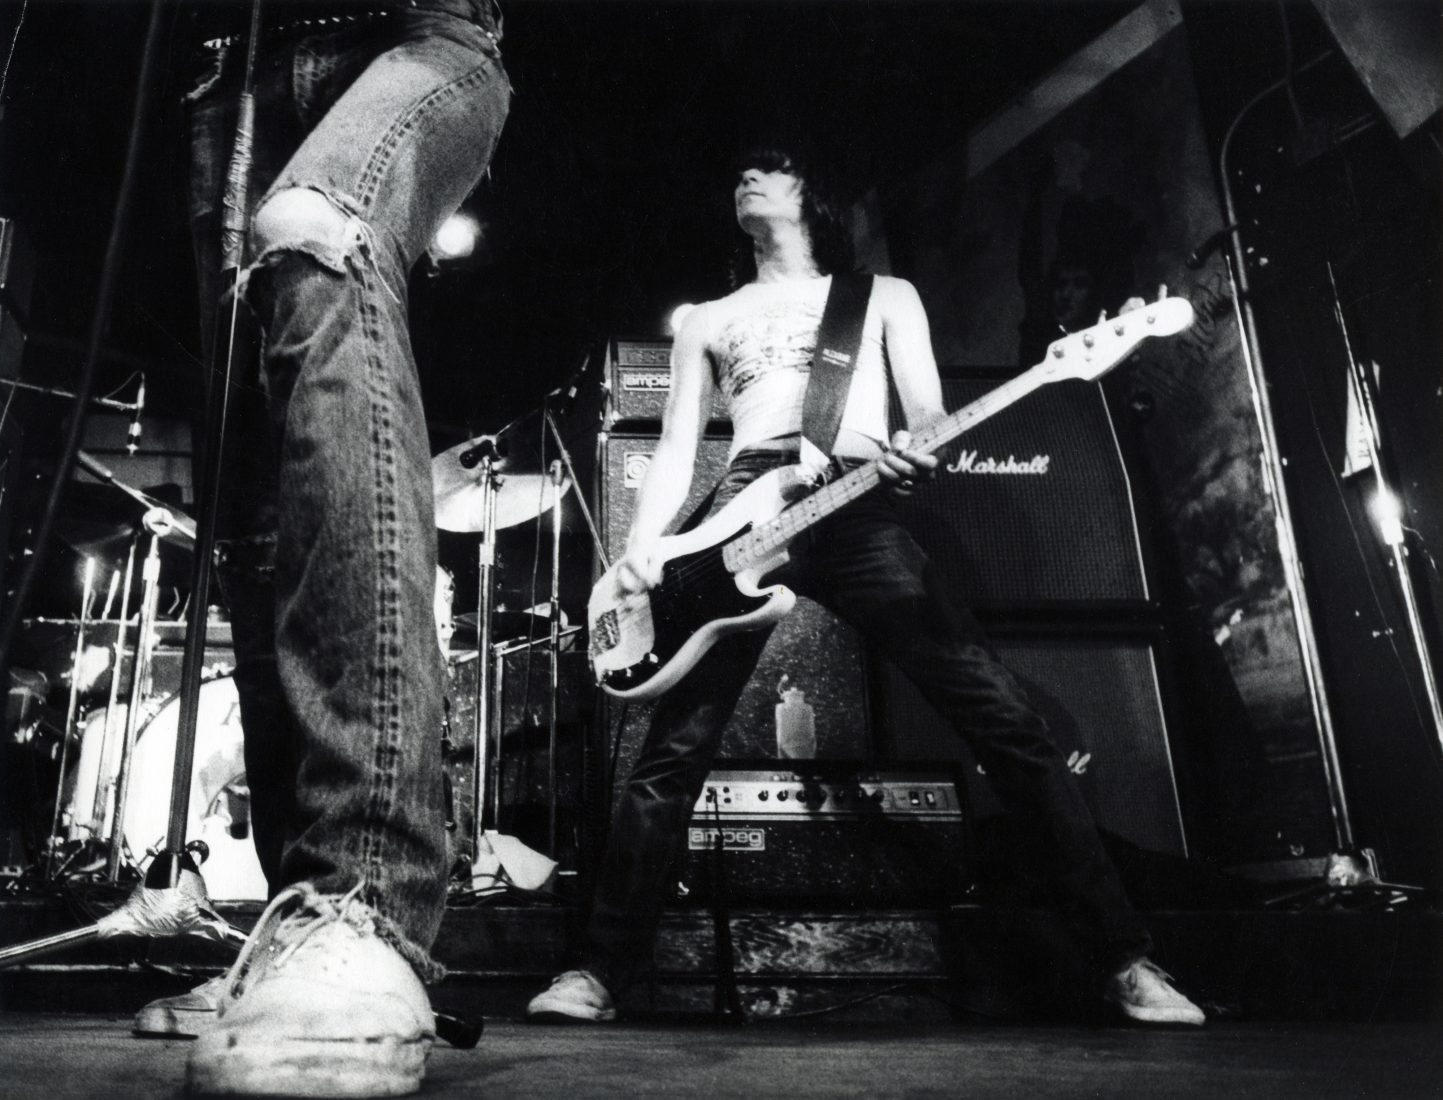 The Ramones at CBGB by punk rock photographer David Godlis